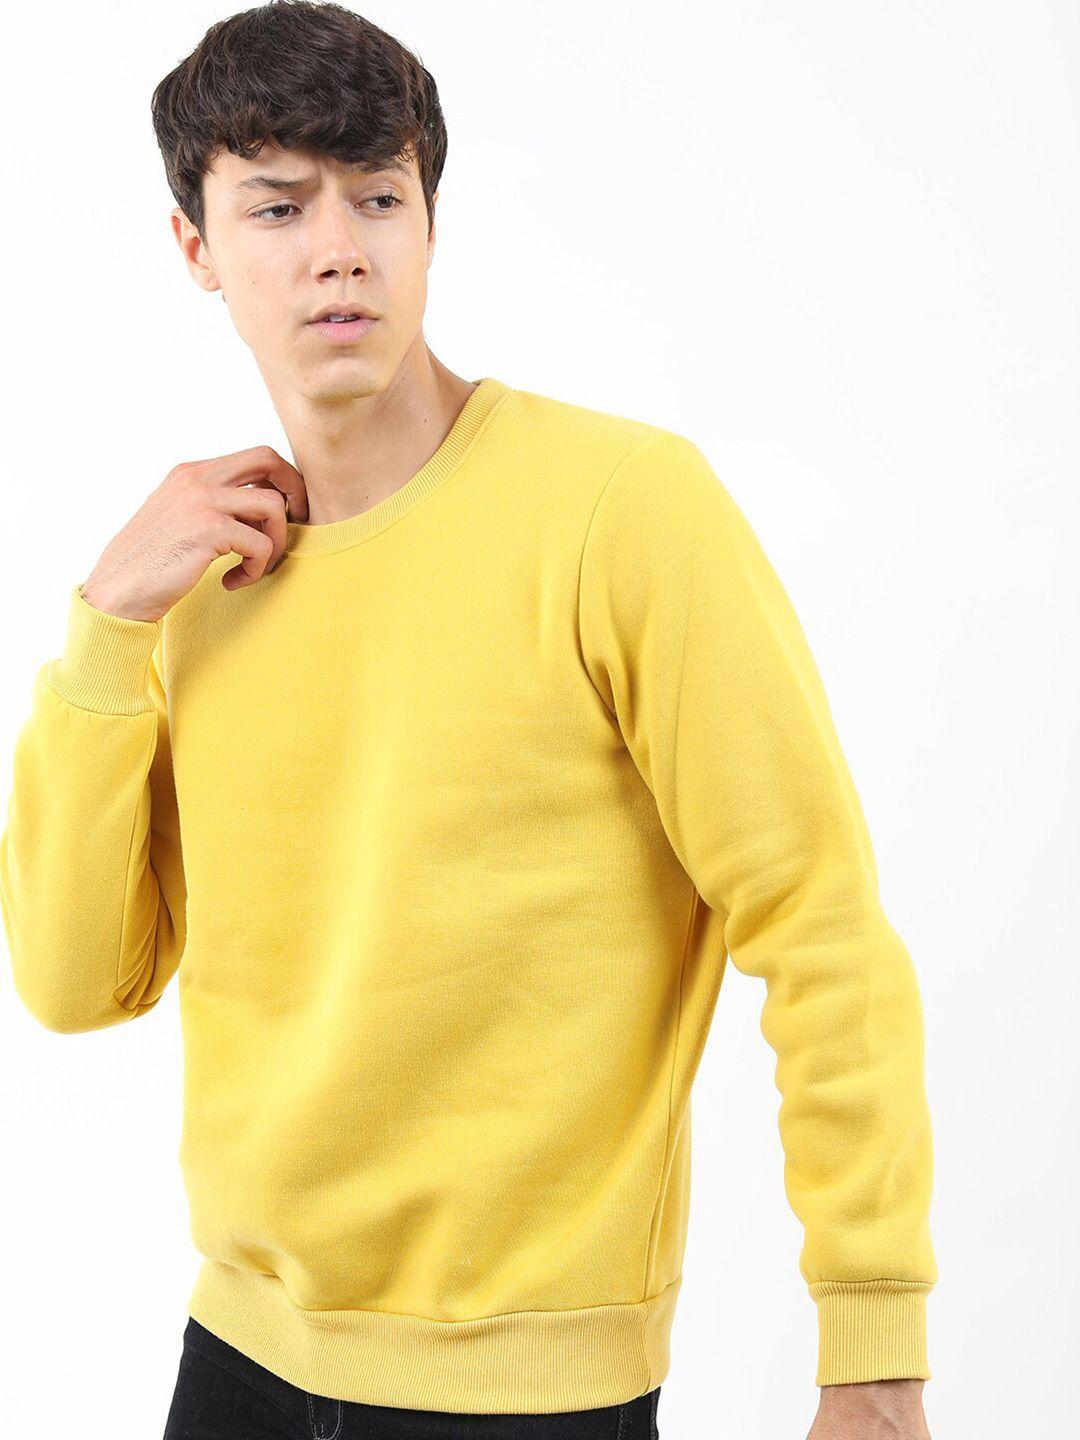 ketch yellow round neck long sleeves sweatshirt